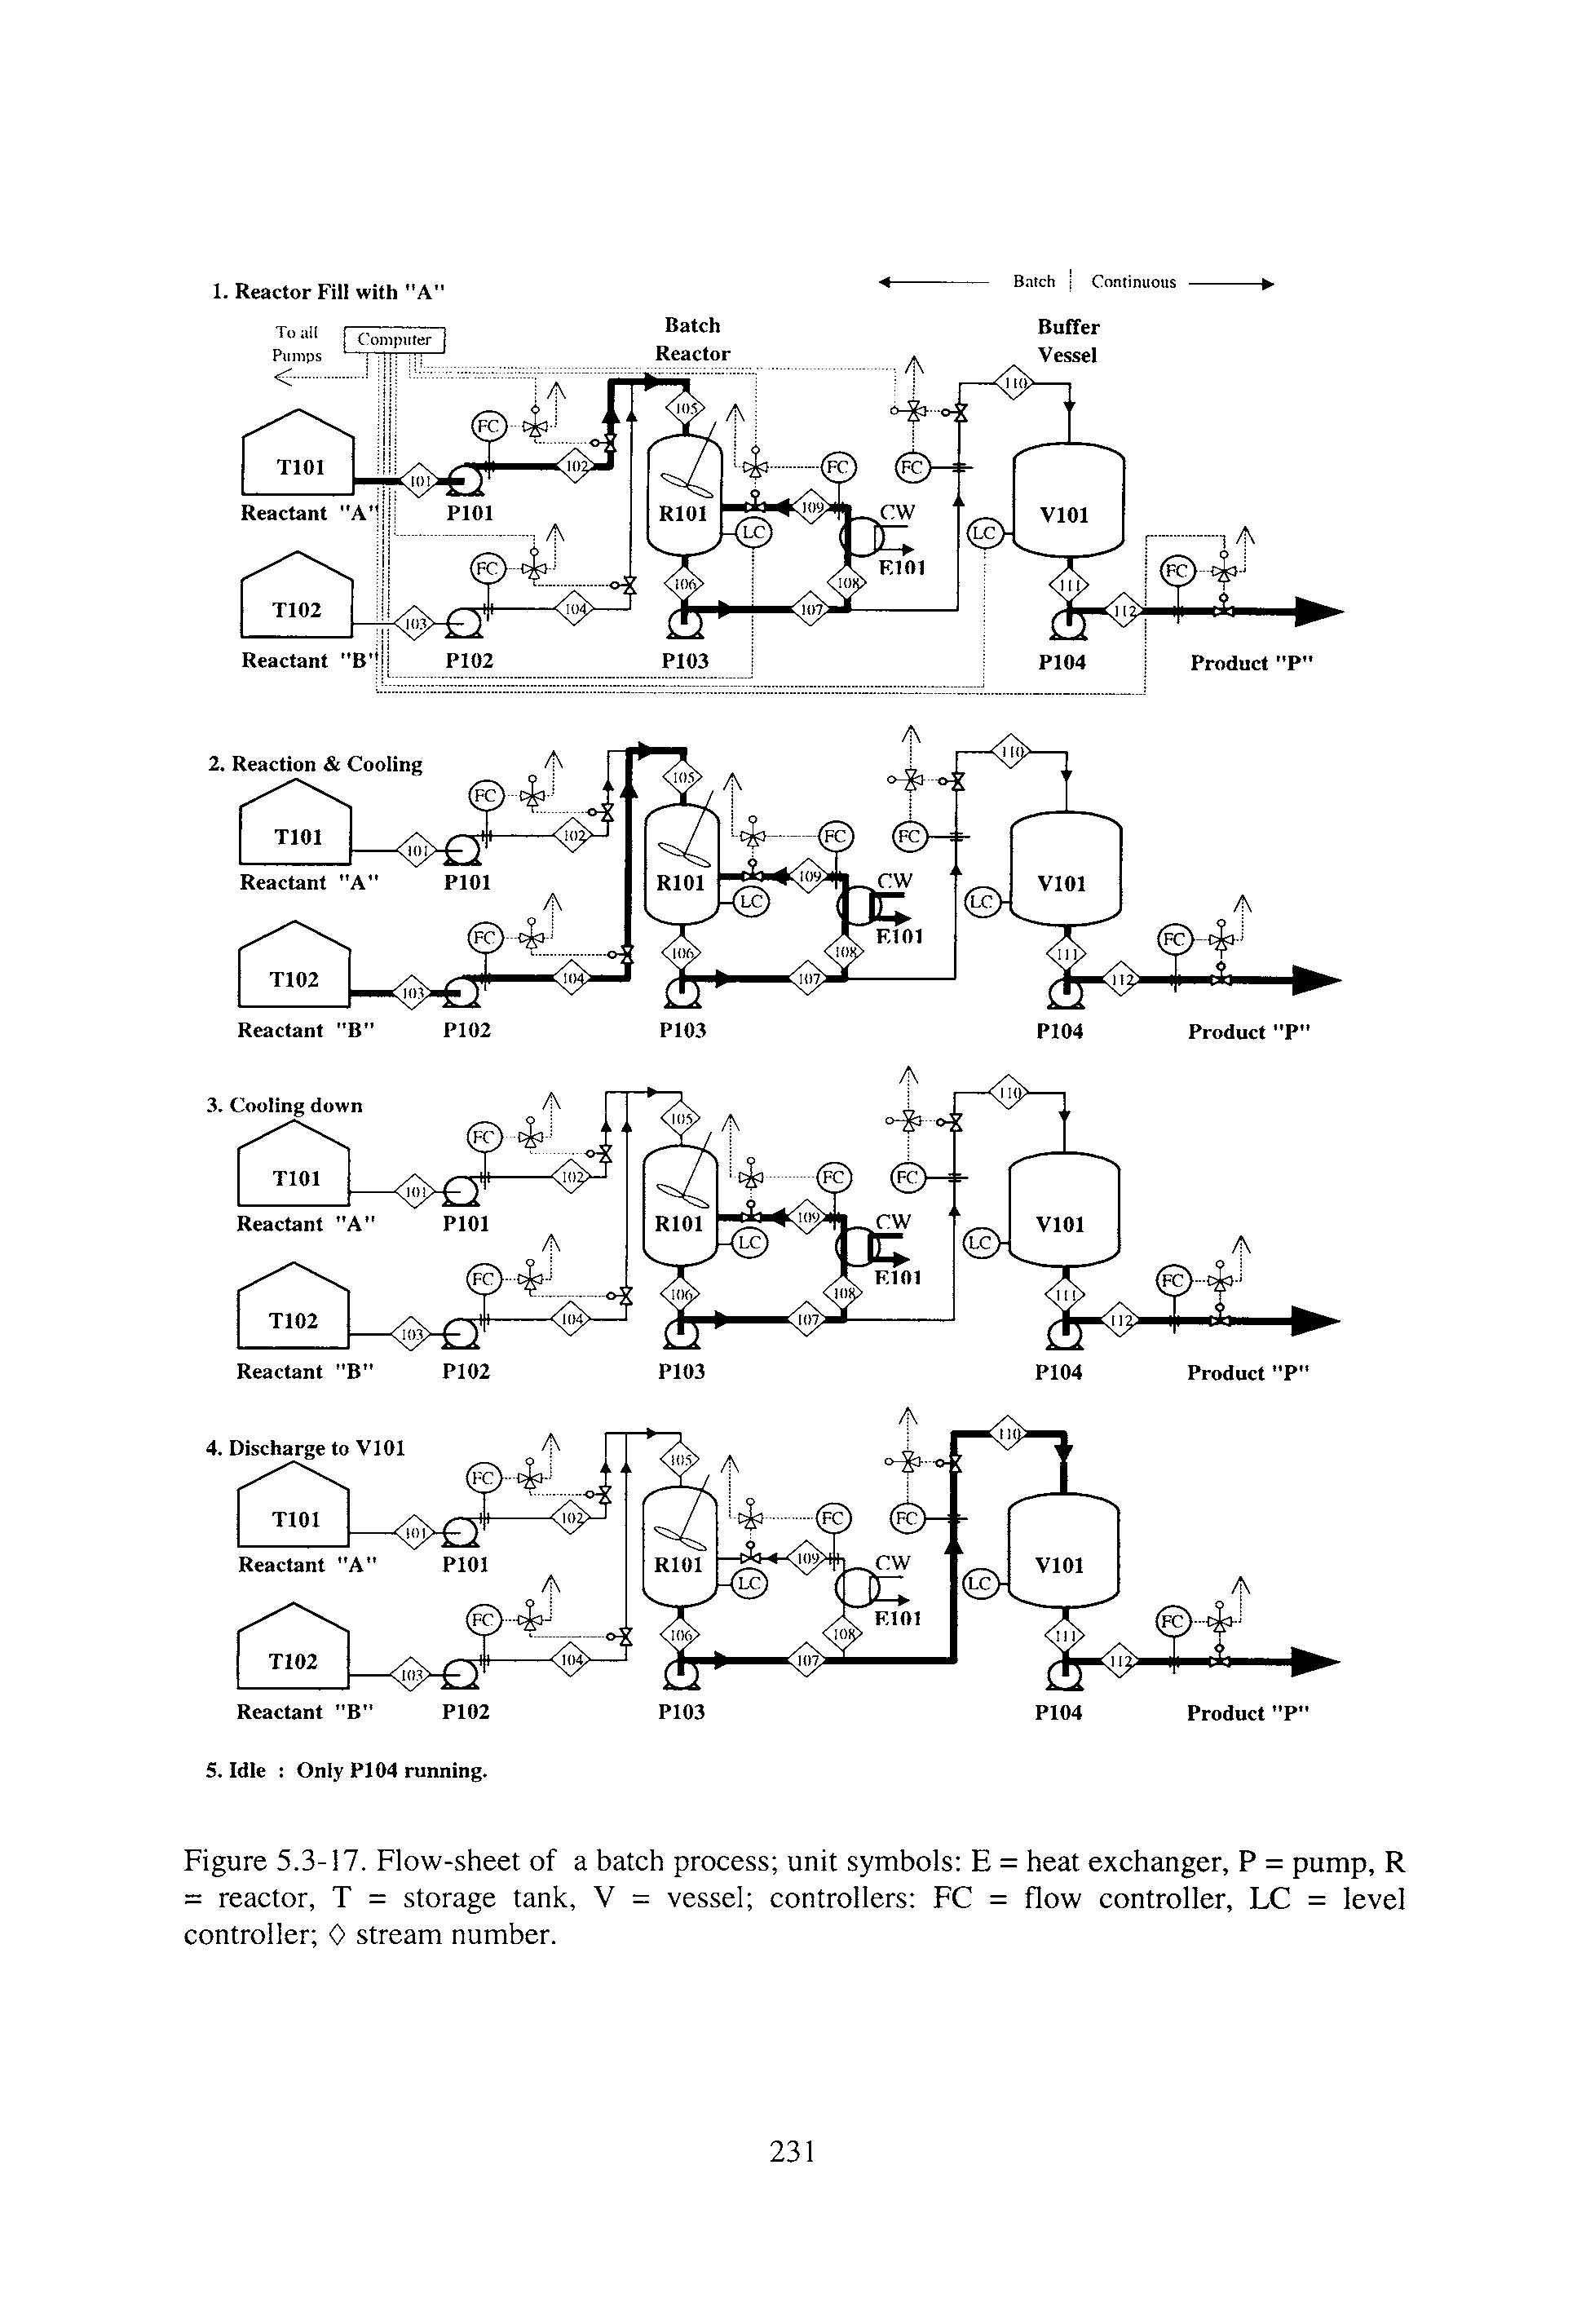 Figure 5.3-17. Flow-sheet of a batch process unit symbols E = heat exchanger, P = pump, R = reactor, T = storage tank, V = vessel controllers FC = flow controller, LC = level controller 0 stream number.